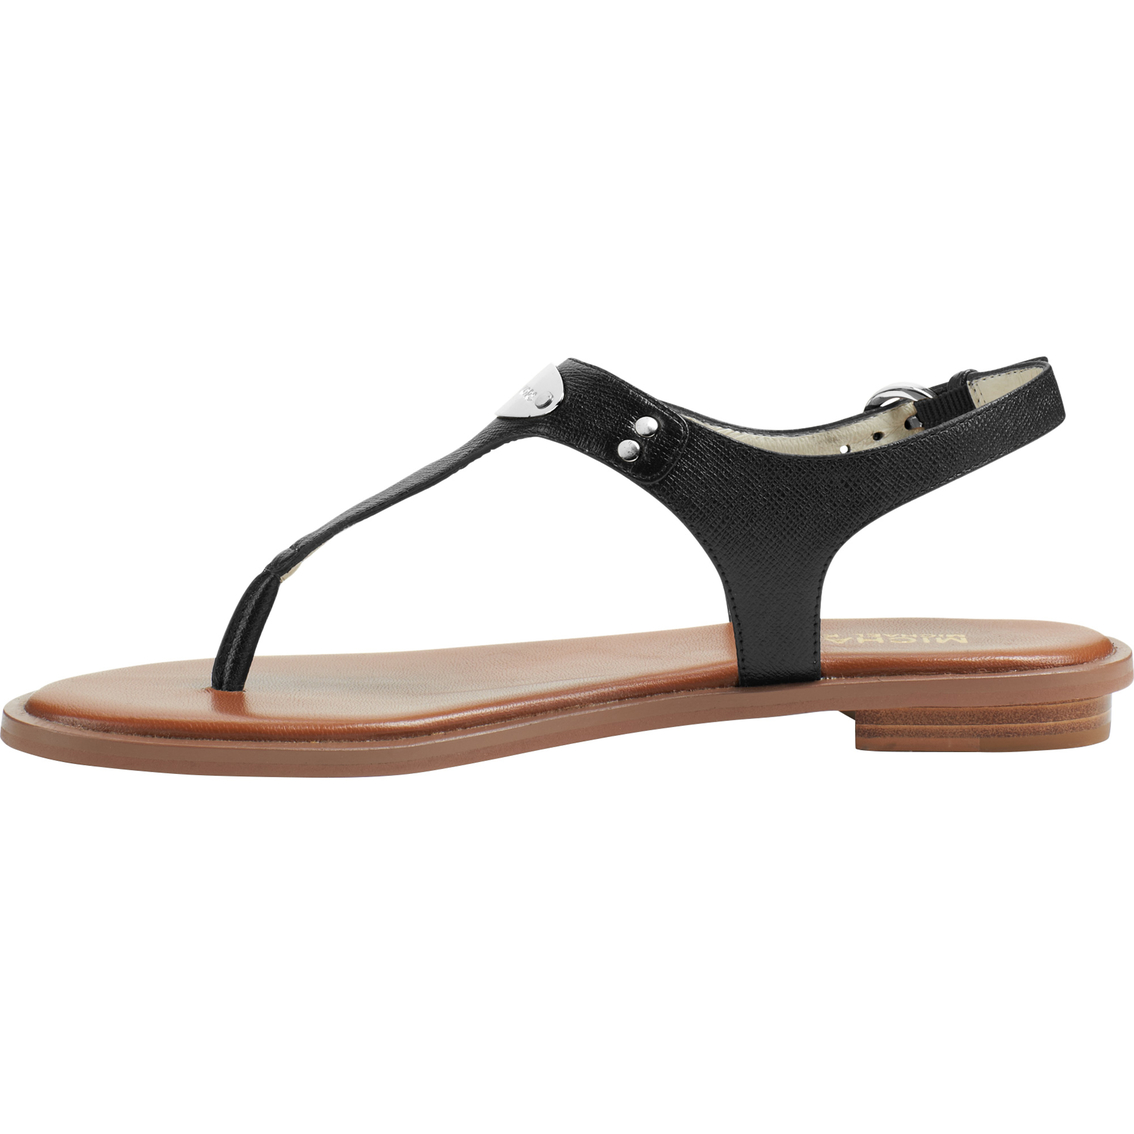 Michael Kors Mk Plate Thong Sandals | Flats | Shoes | Shop The Exchange